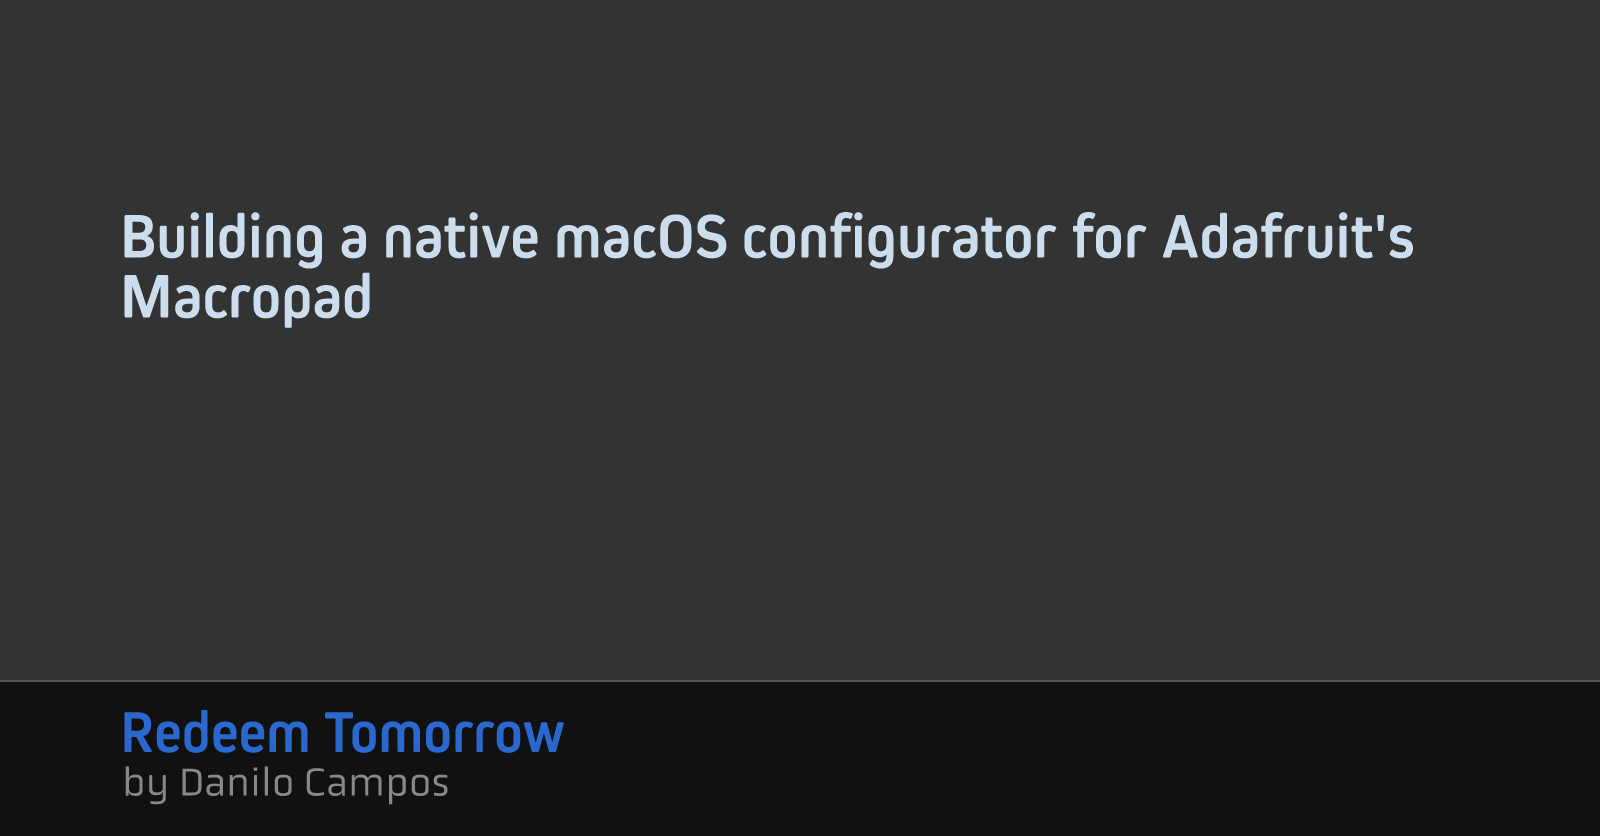 Building a native macOS configurator for Adafruit's Macropad